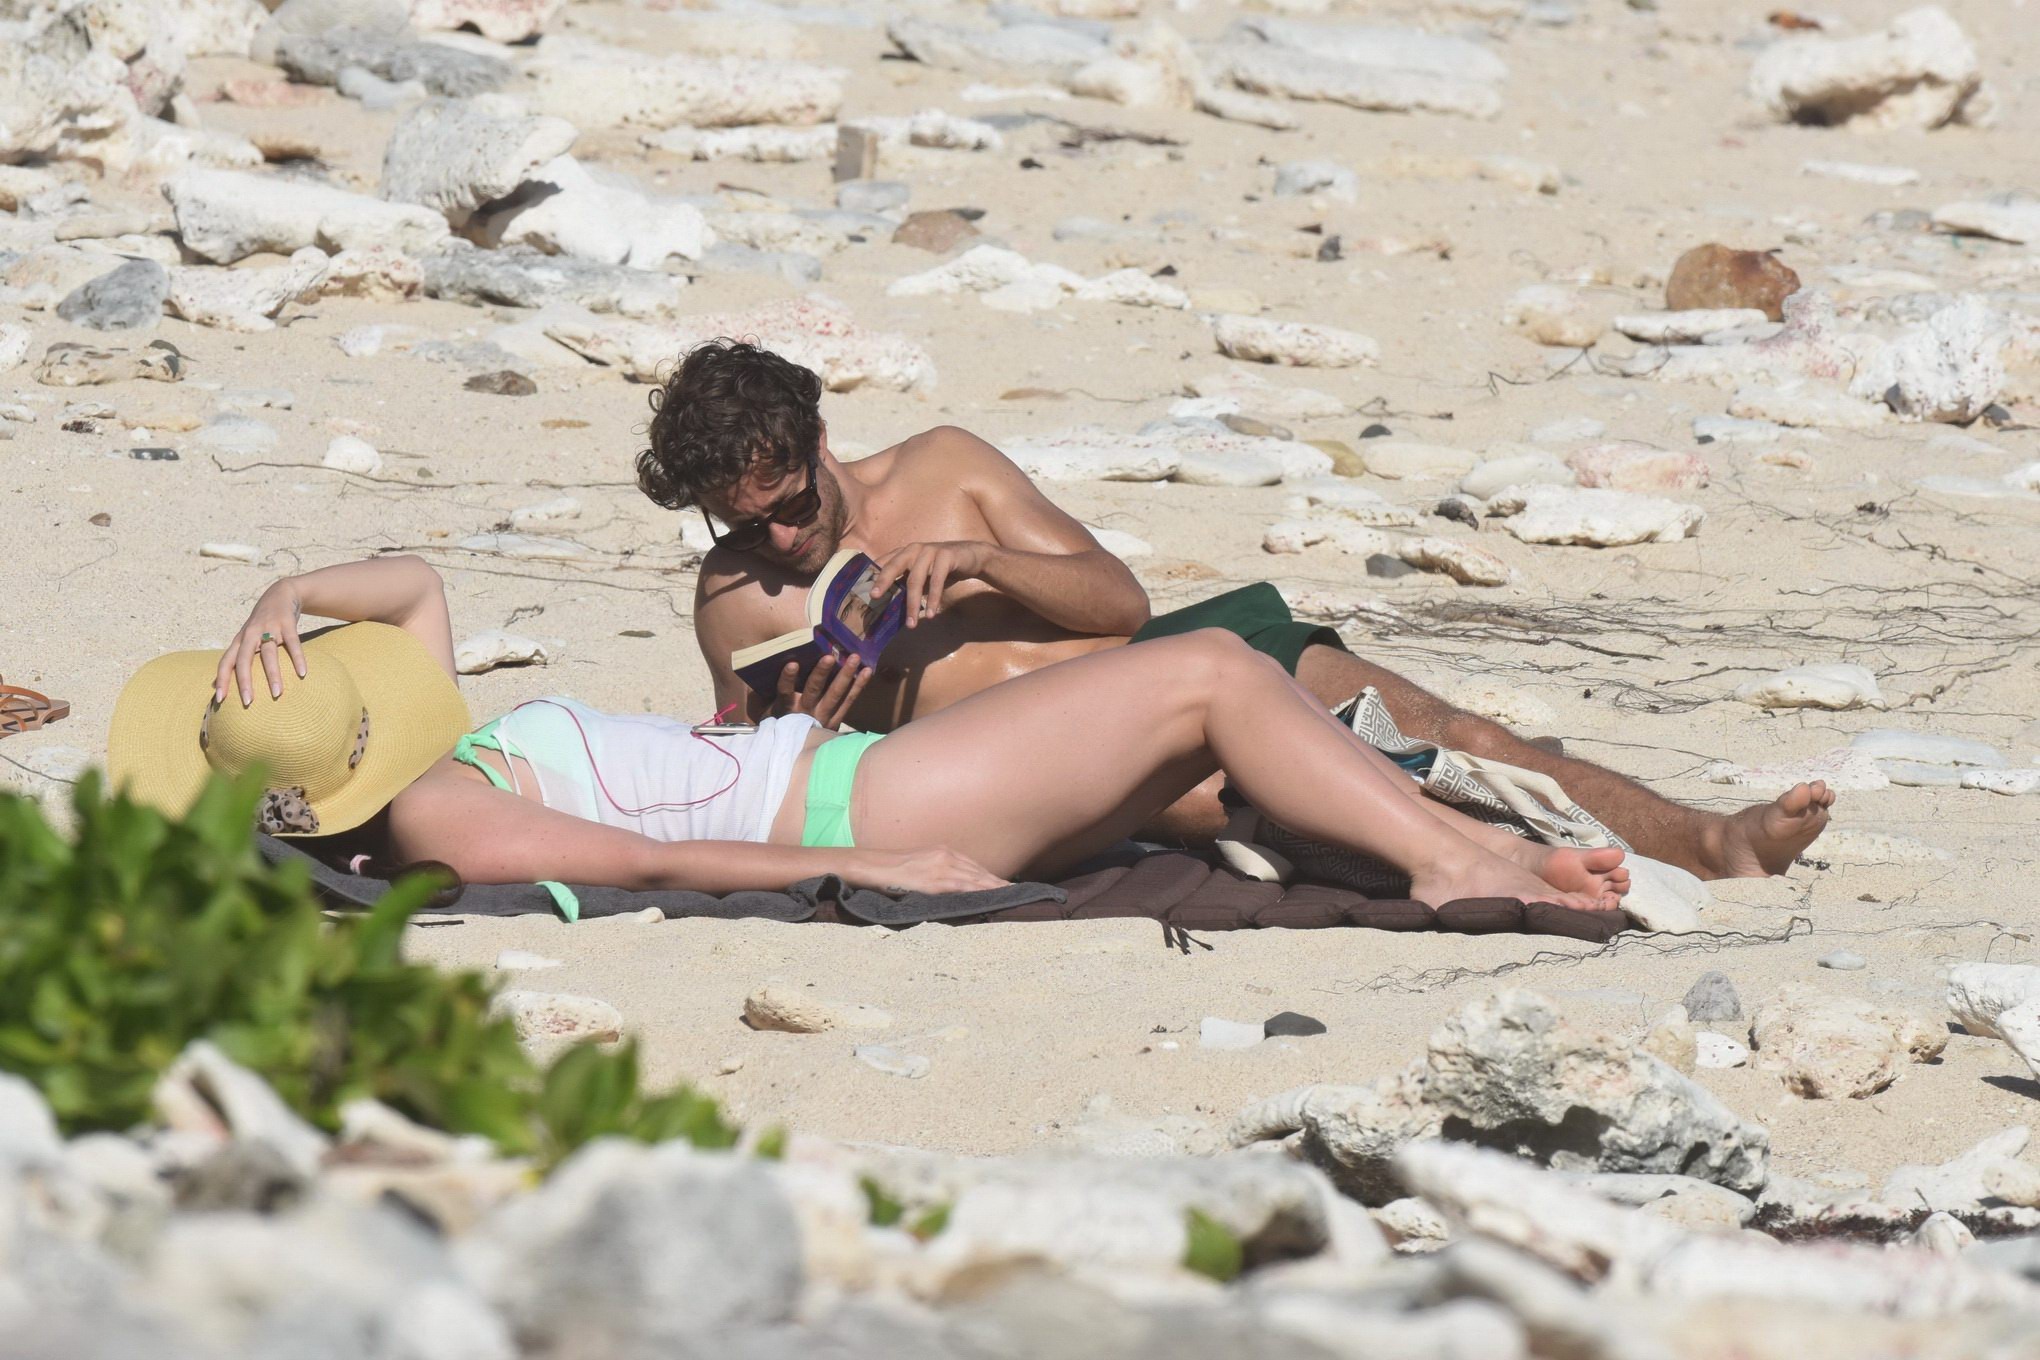 Lana del rey portant un bikini vert sur la plage de st barts
 #75176889